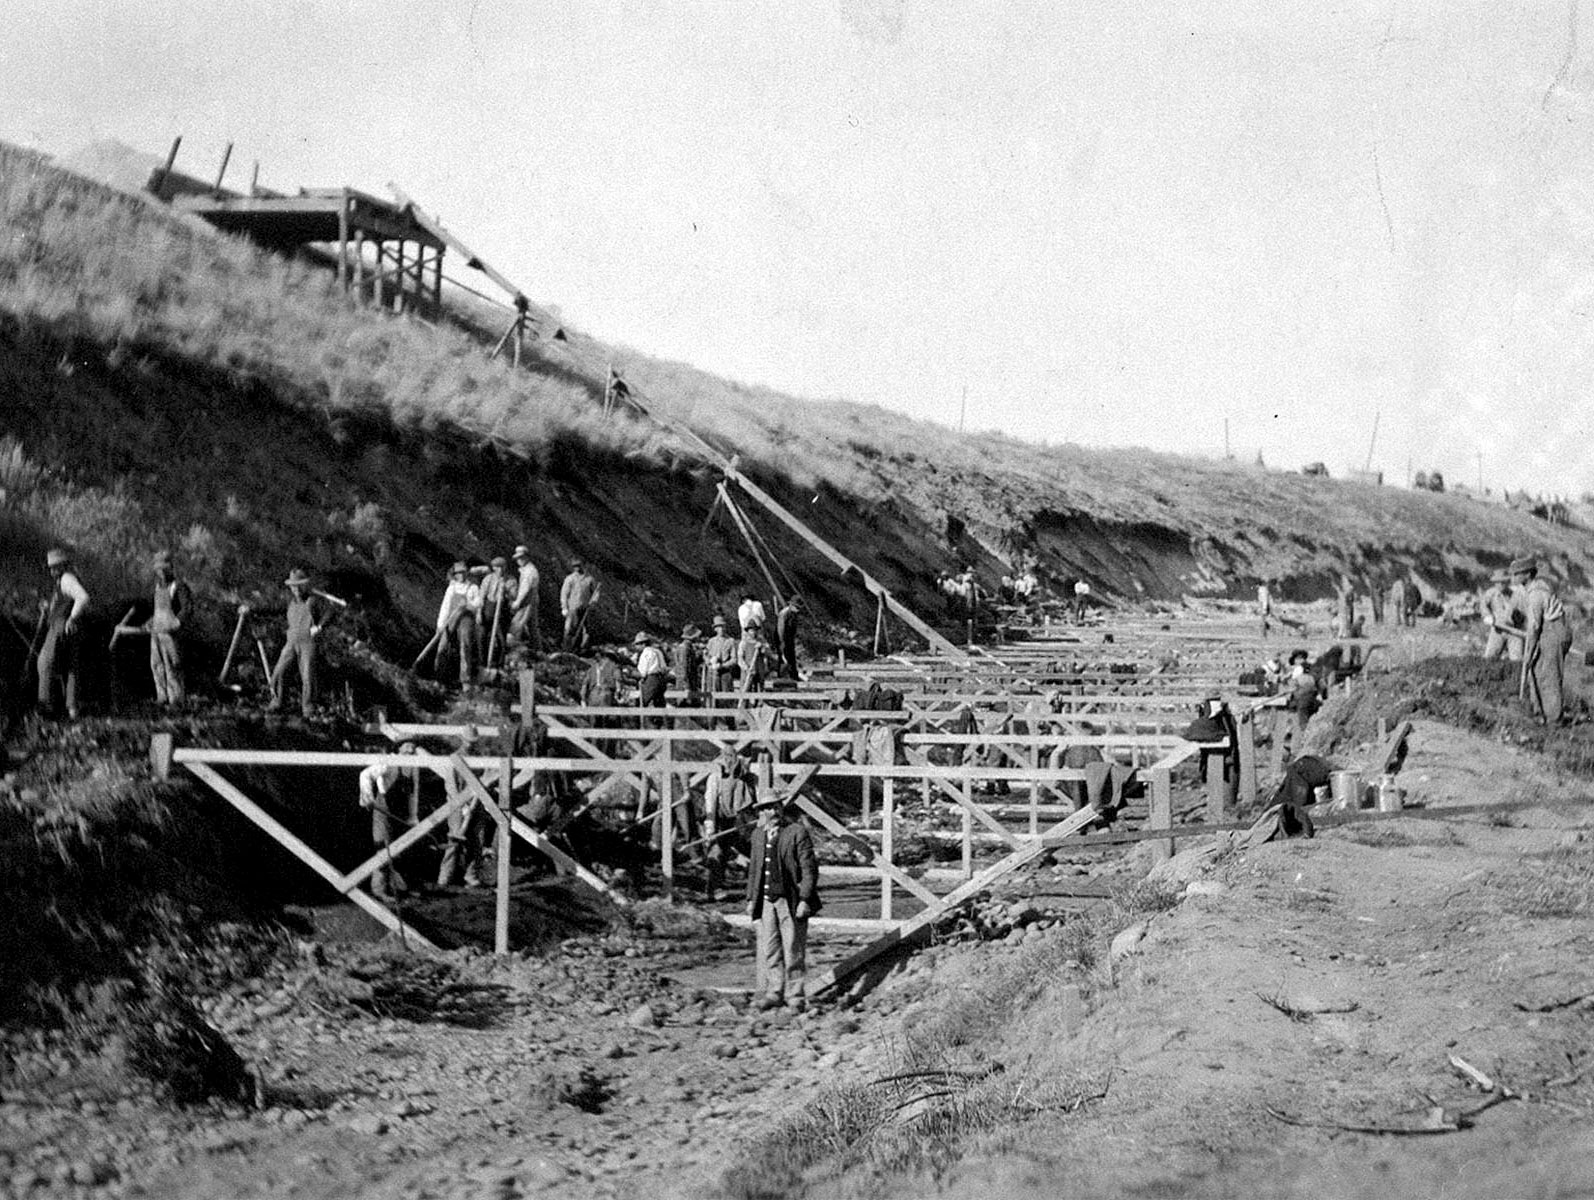 Initial work for the New York (Main) Canal near Boise, Idaho, c. 1910.